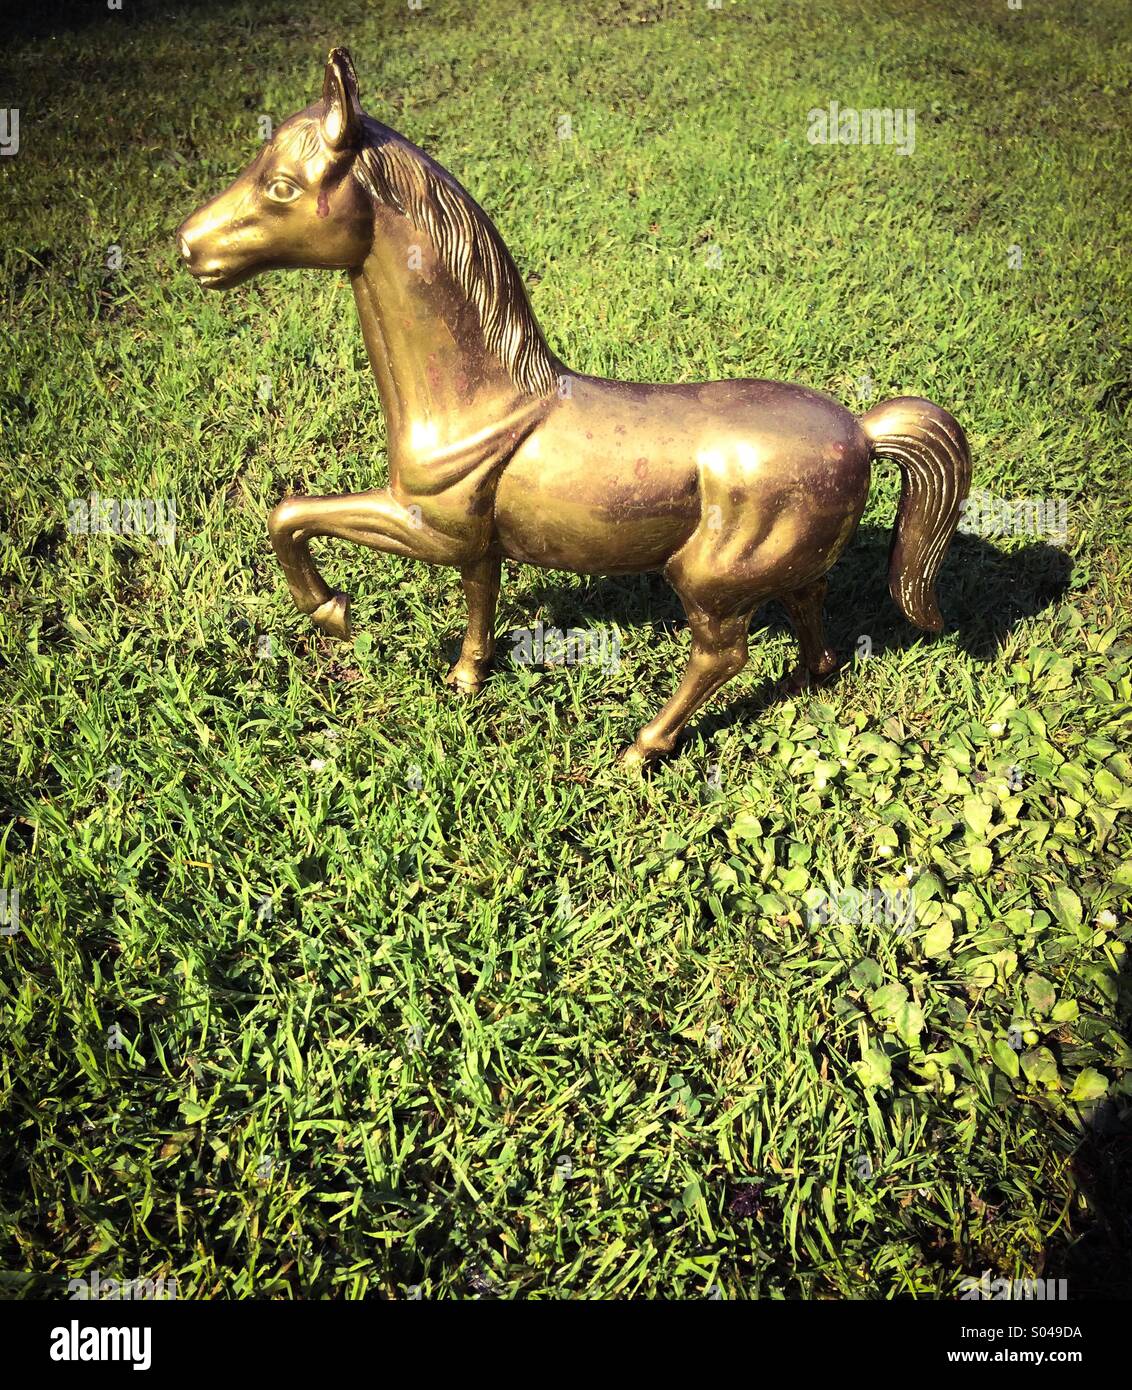 Messing-Pferd auf Rasen Stockfotografie - Alamy